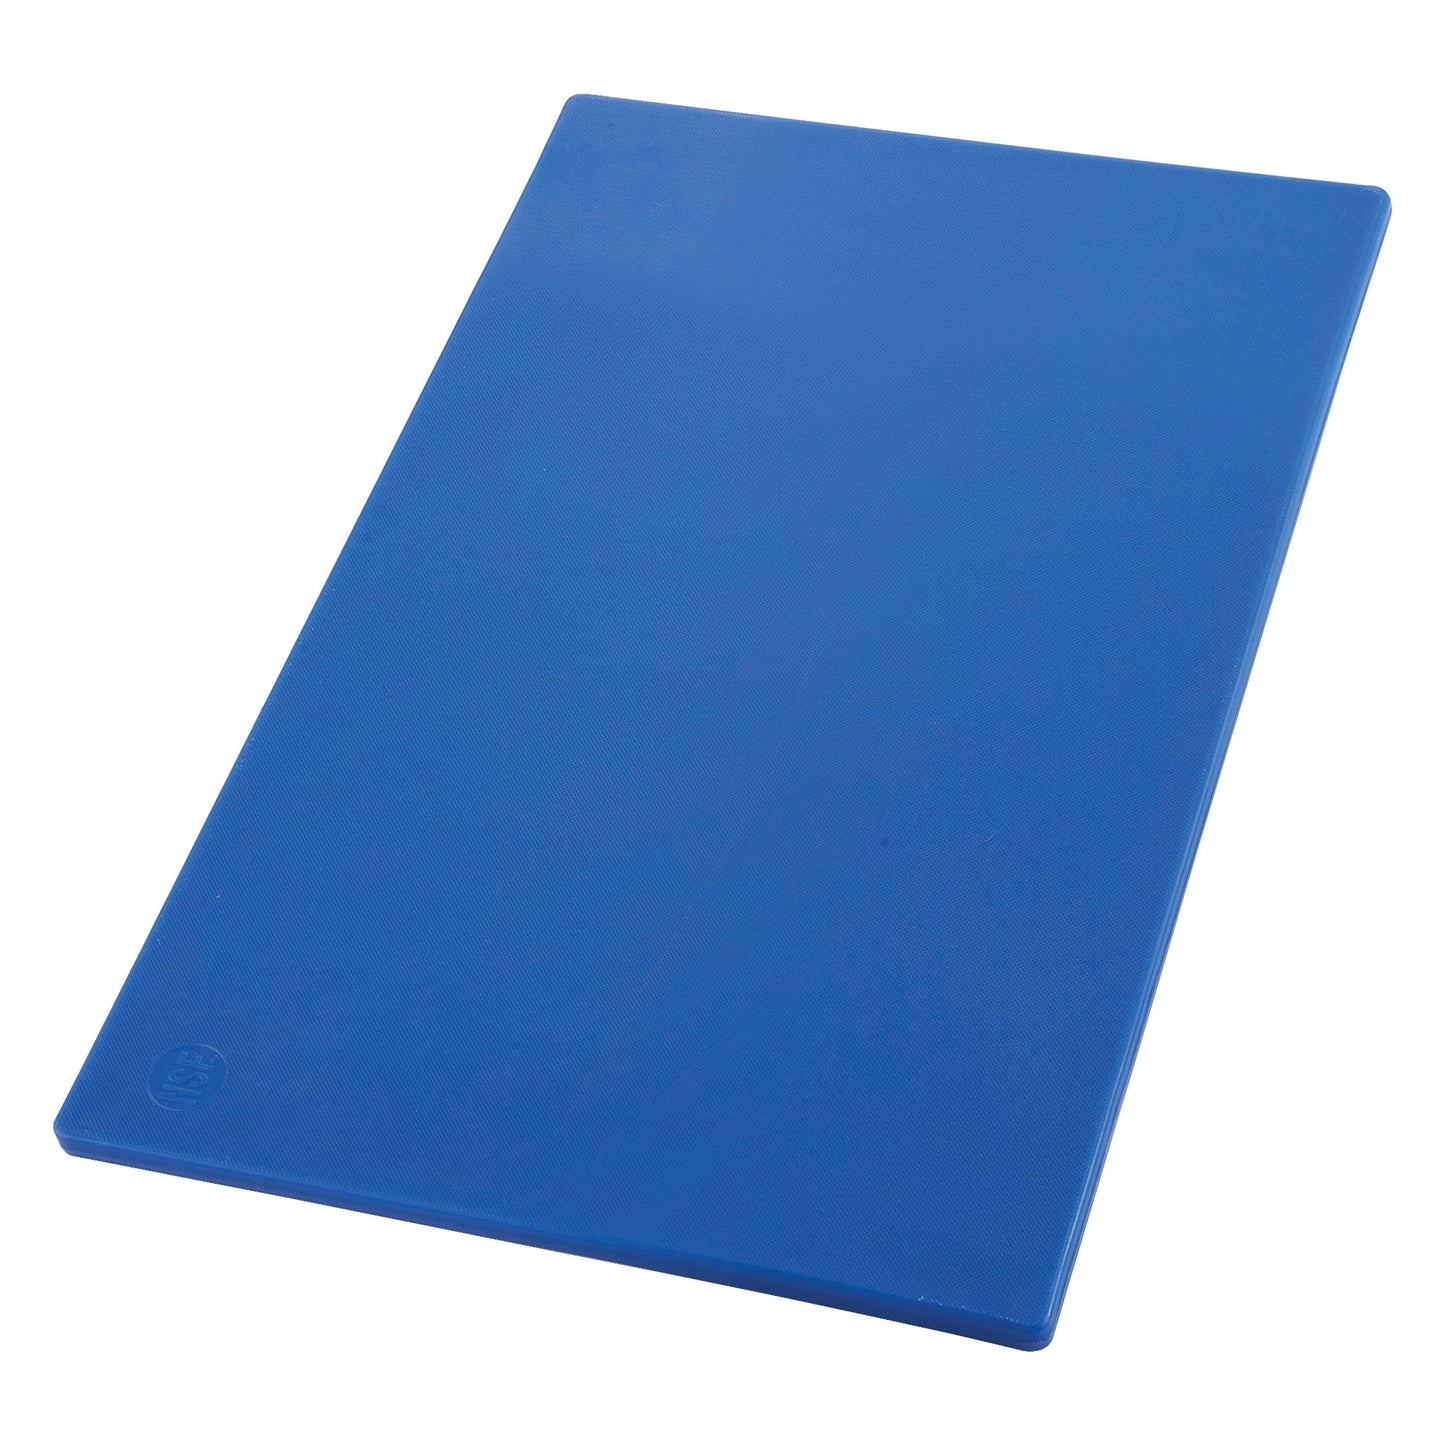 CBBU-1218 - HACCP Color-Coded Cutting Board - 12 x 18, Blue